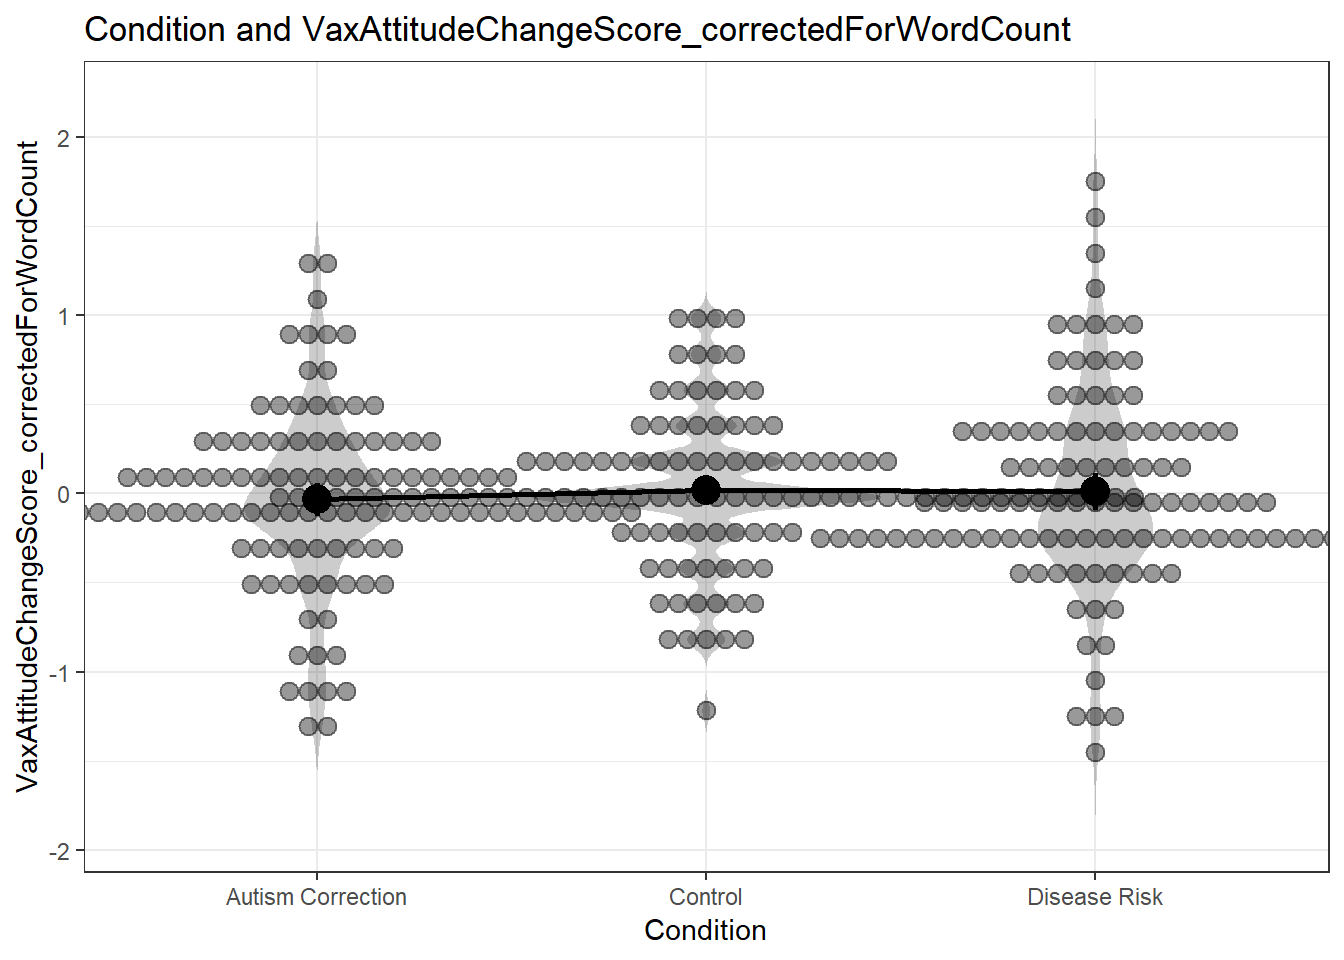 Dot-Violin-Line plot on the basis of the corrected attitude change scores in Horne et al.